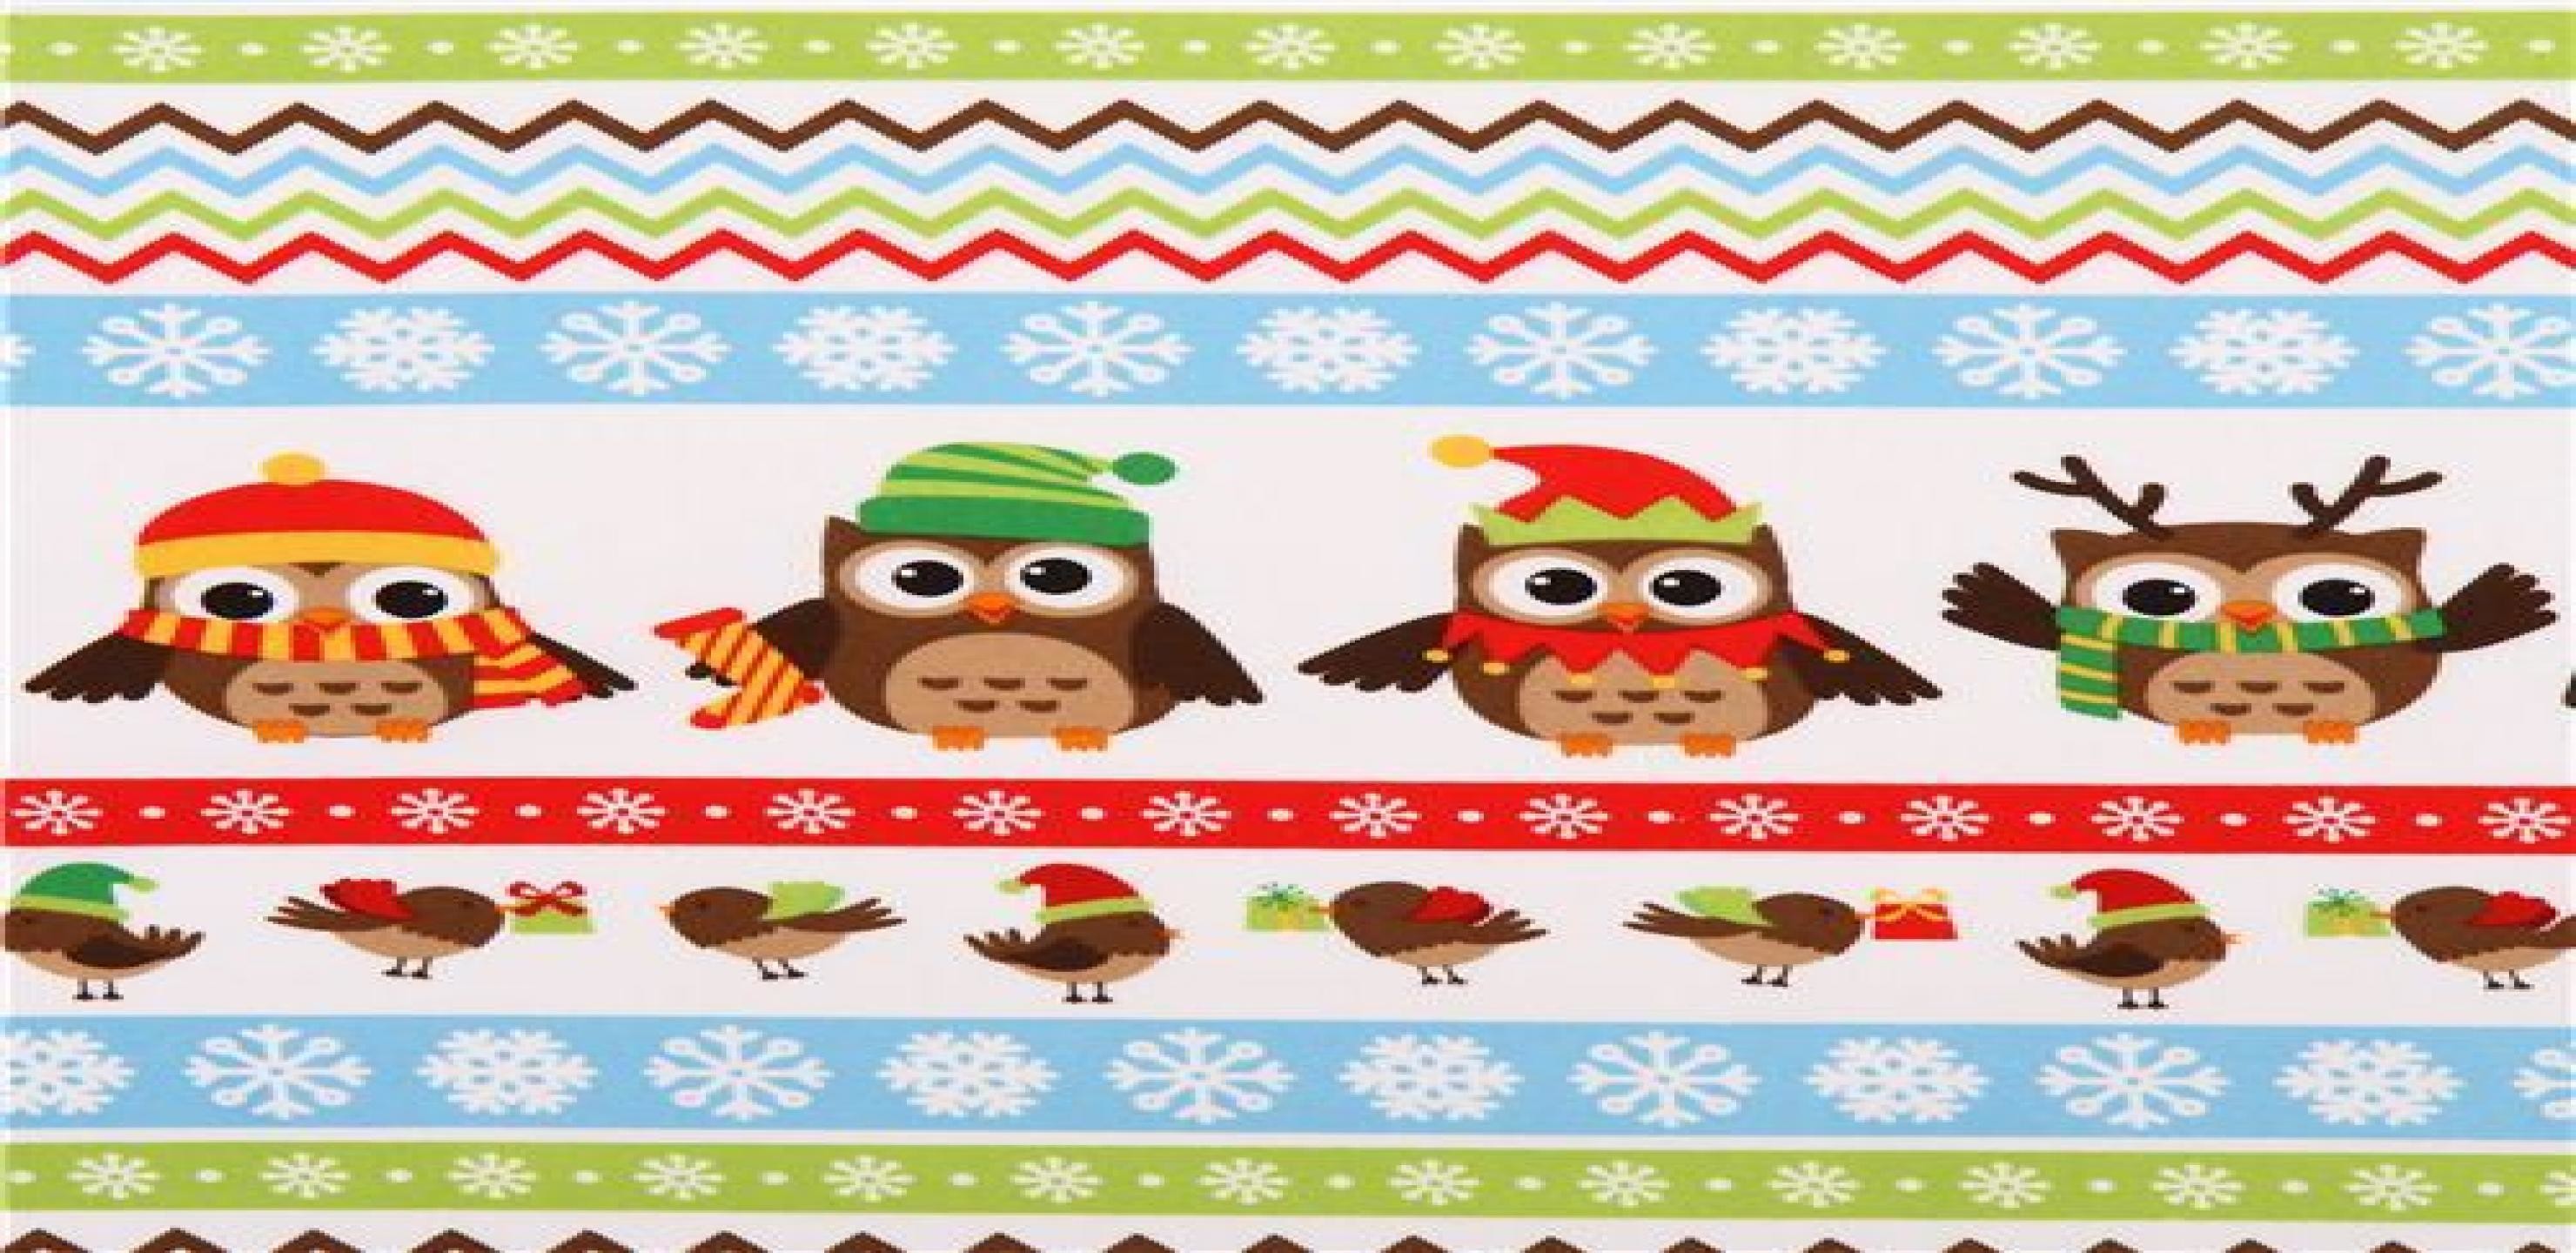 2960x1440 Owl christmas wallpaper christmas wallpaper owl jpg  Owl christmas  wallpaper